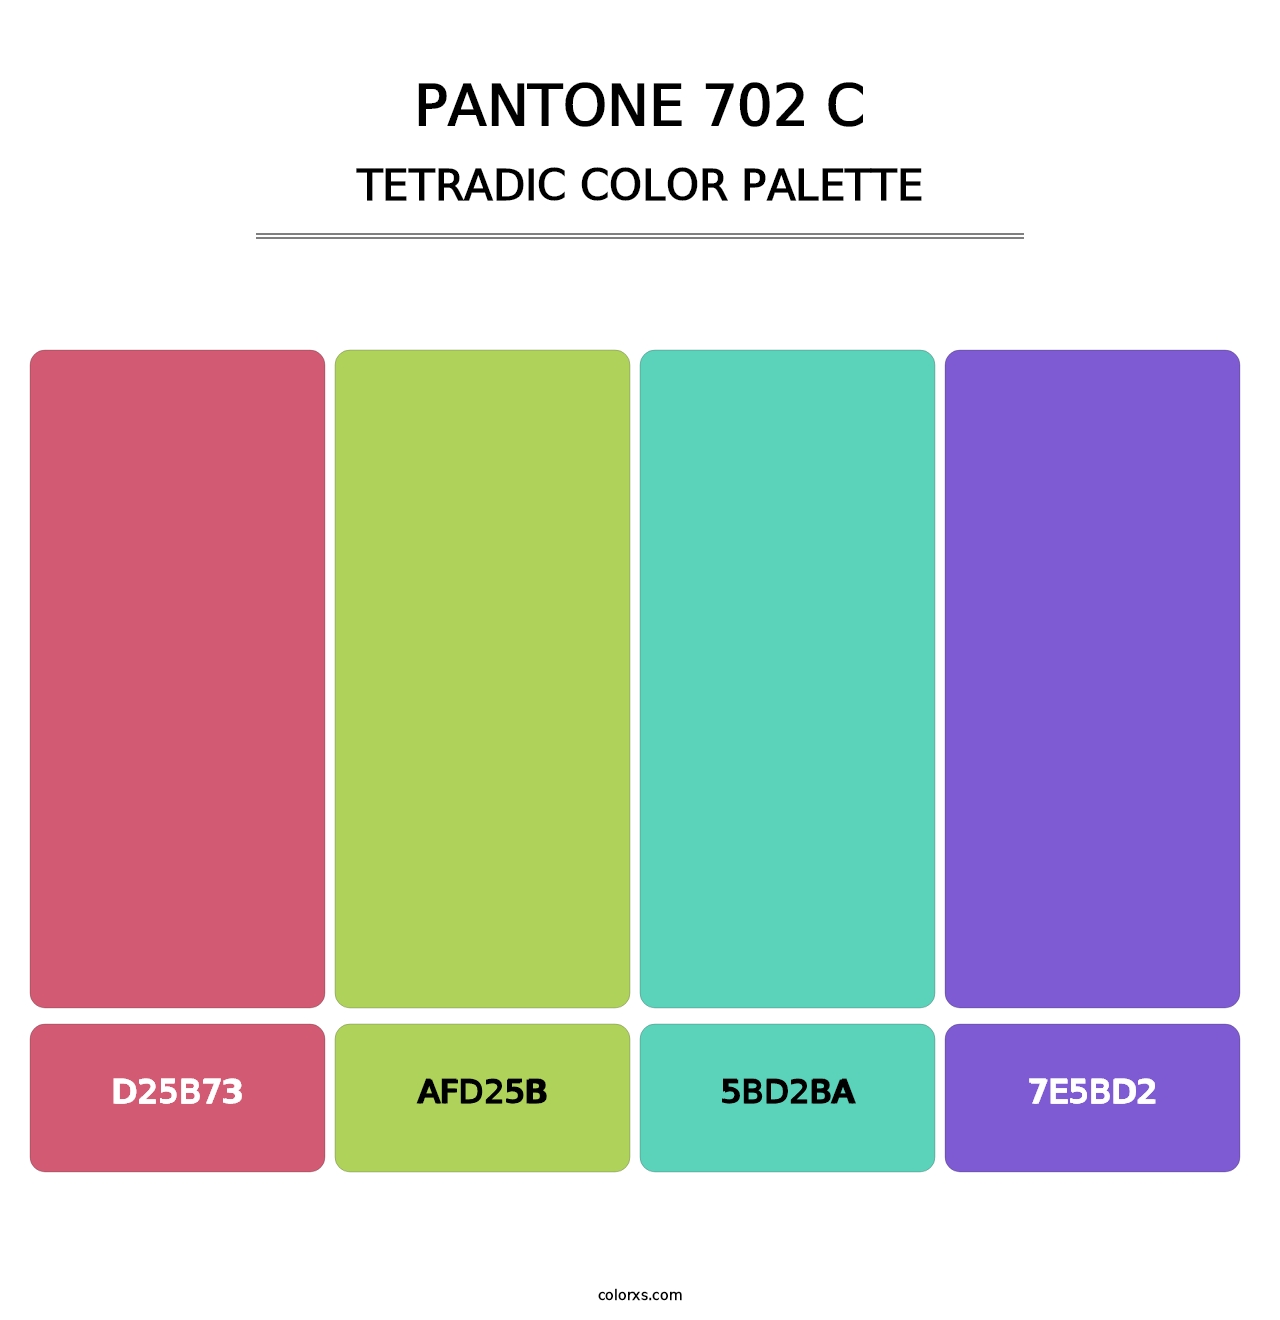 PANTONE 702 C - Tetradic Color Palette